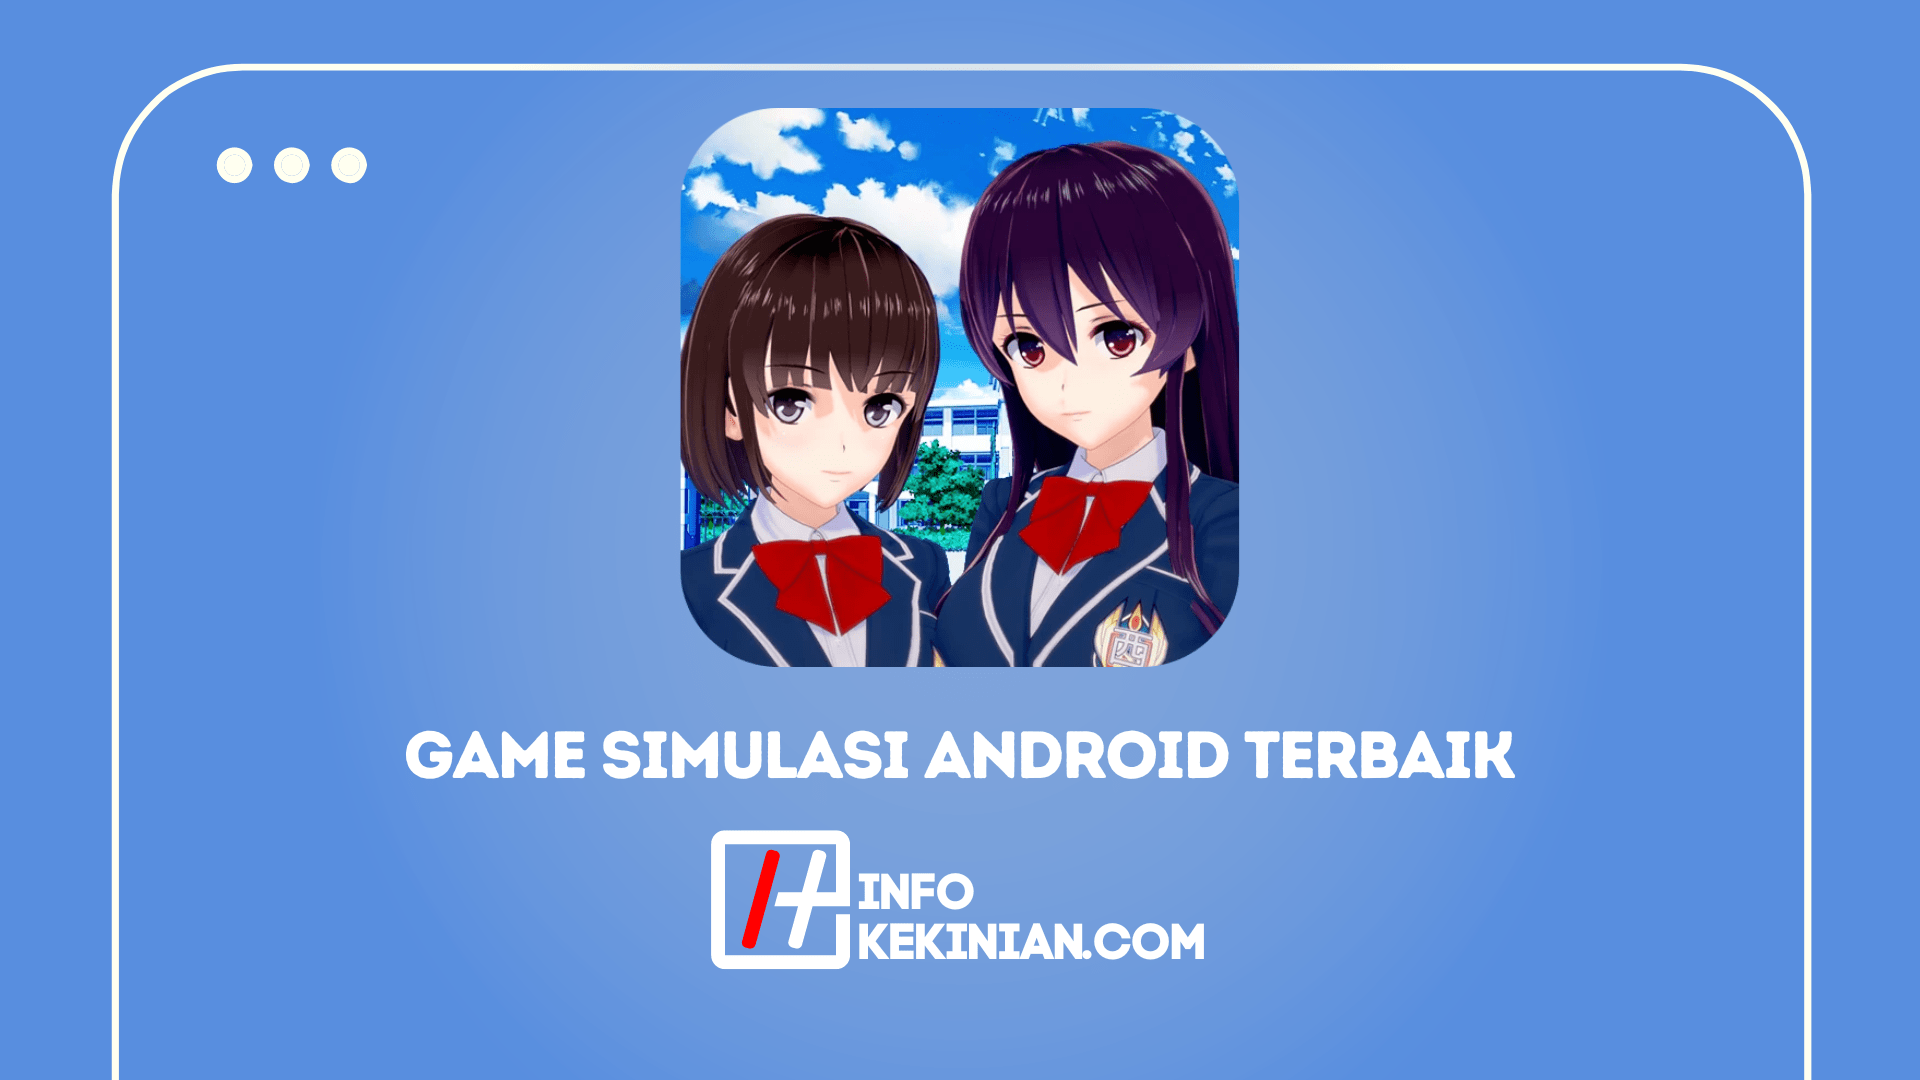 Game Simulator Android Paling Seru. Game Simulasi Android Terbaik yang Paling Seru